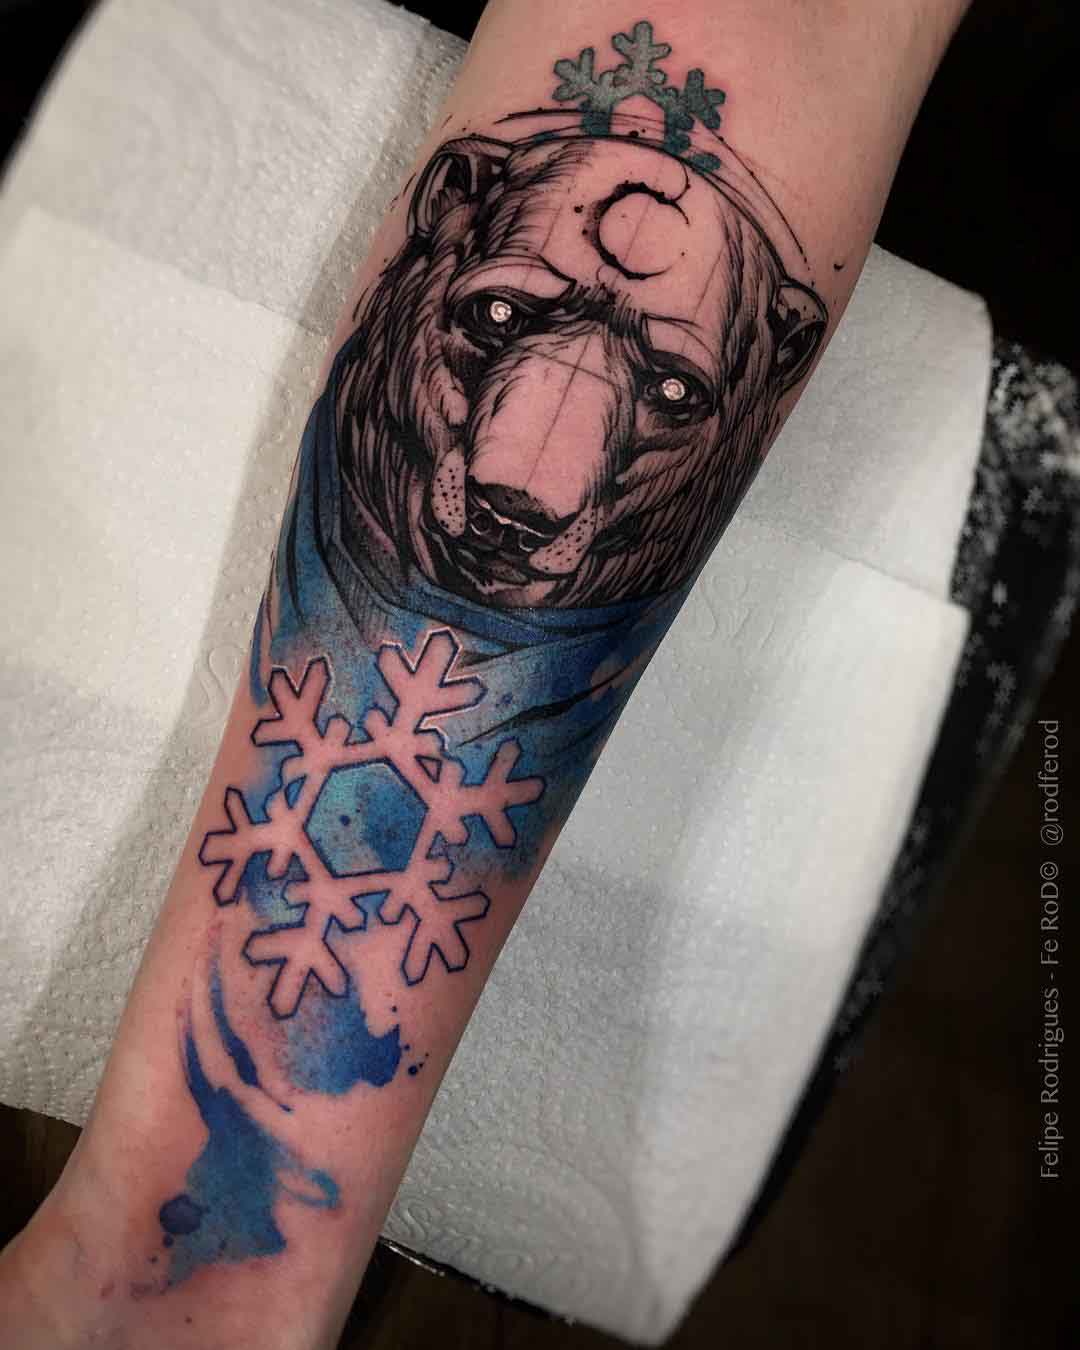 Single needle polar bear tattoo on the bicep.